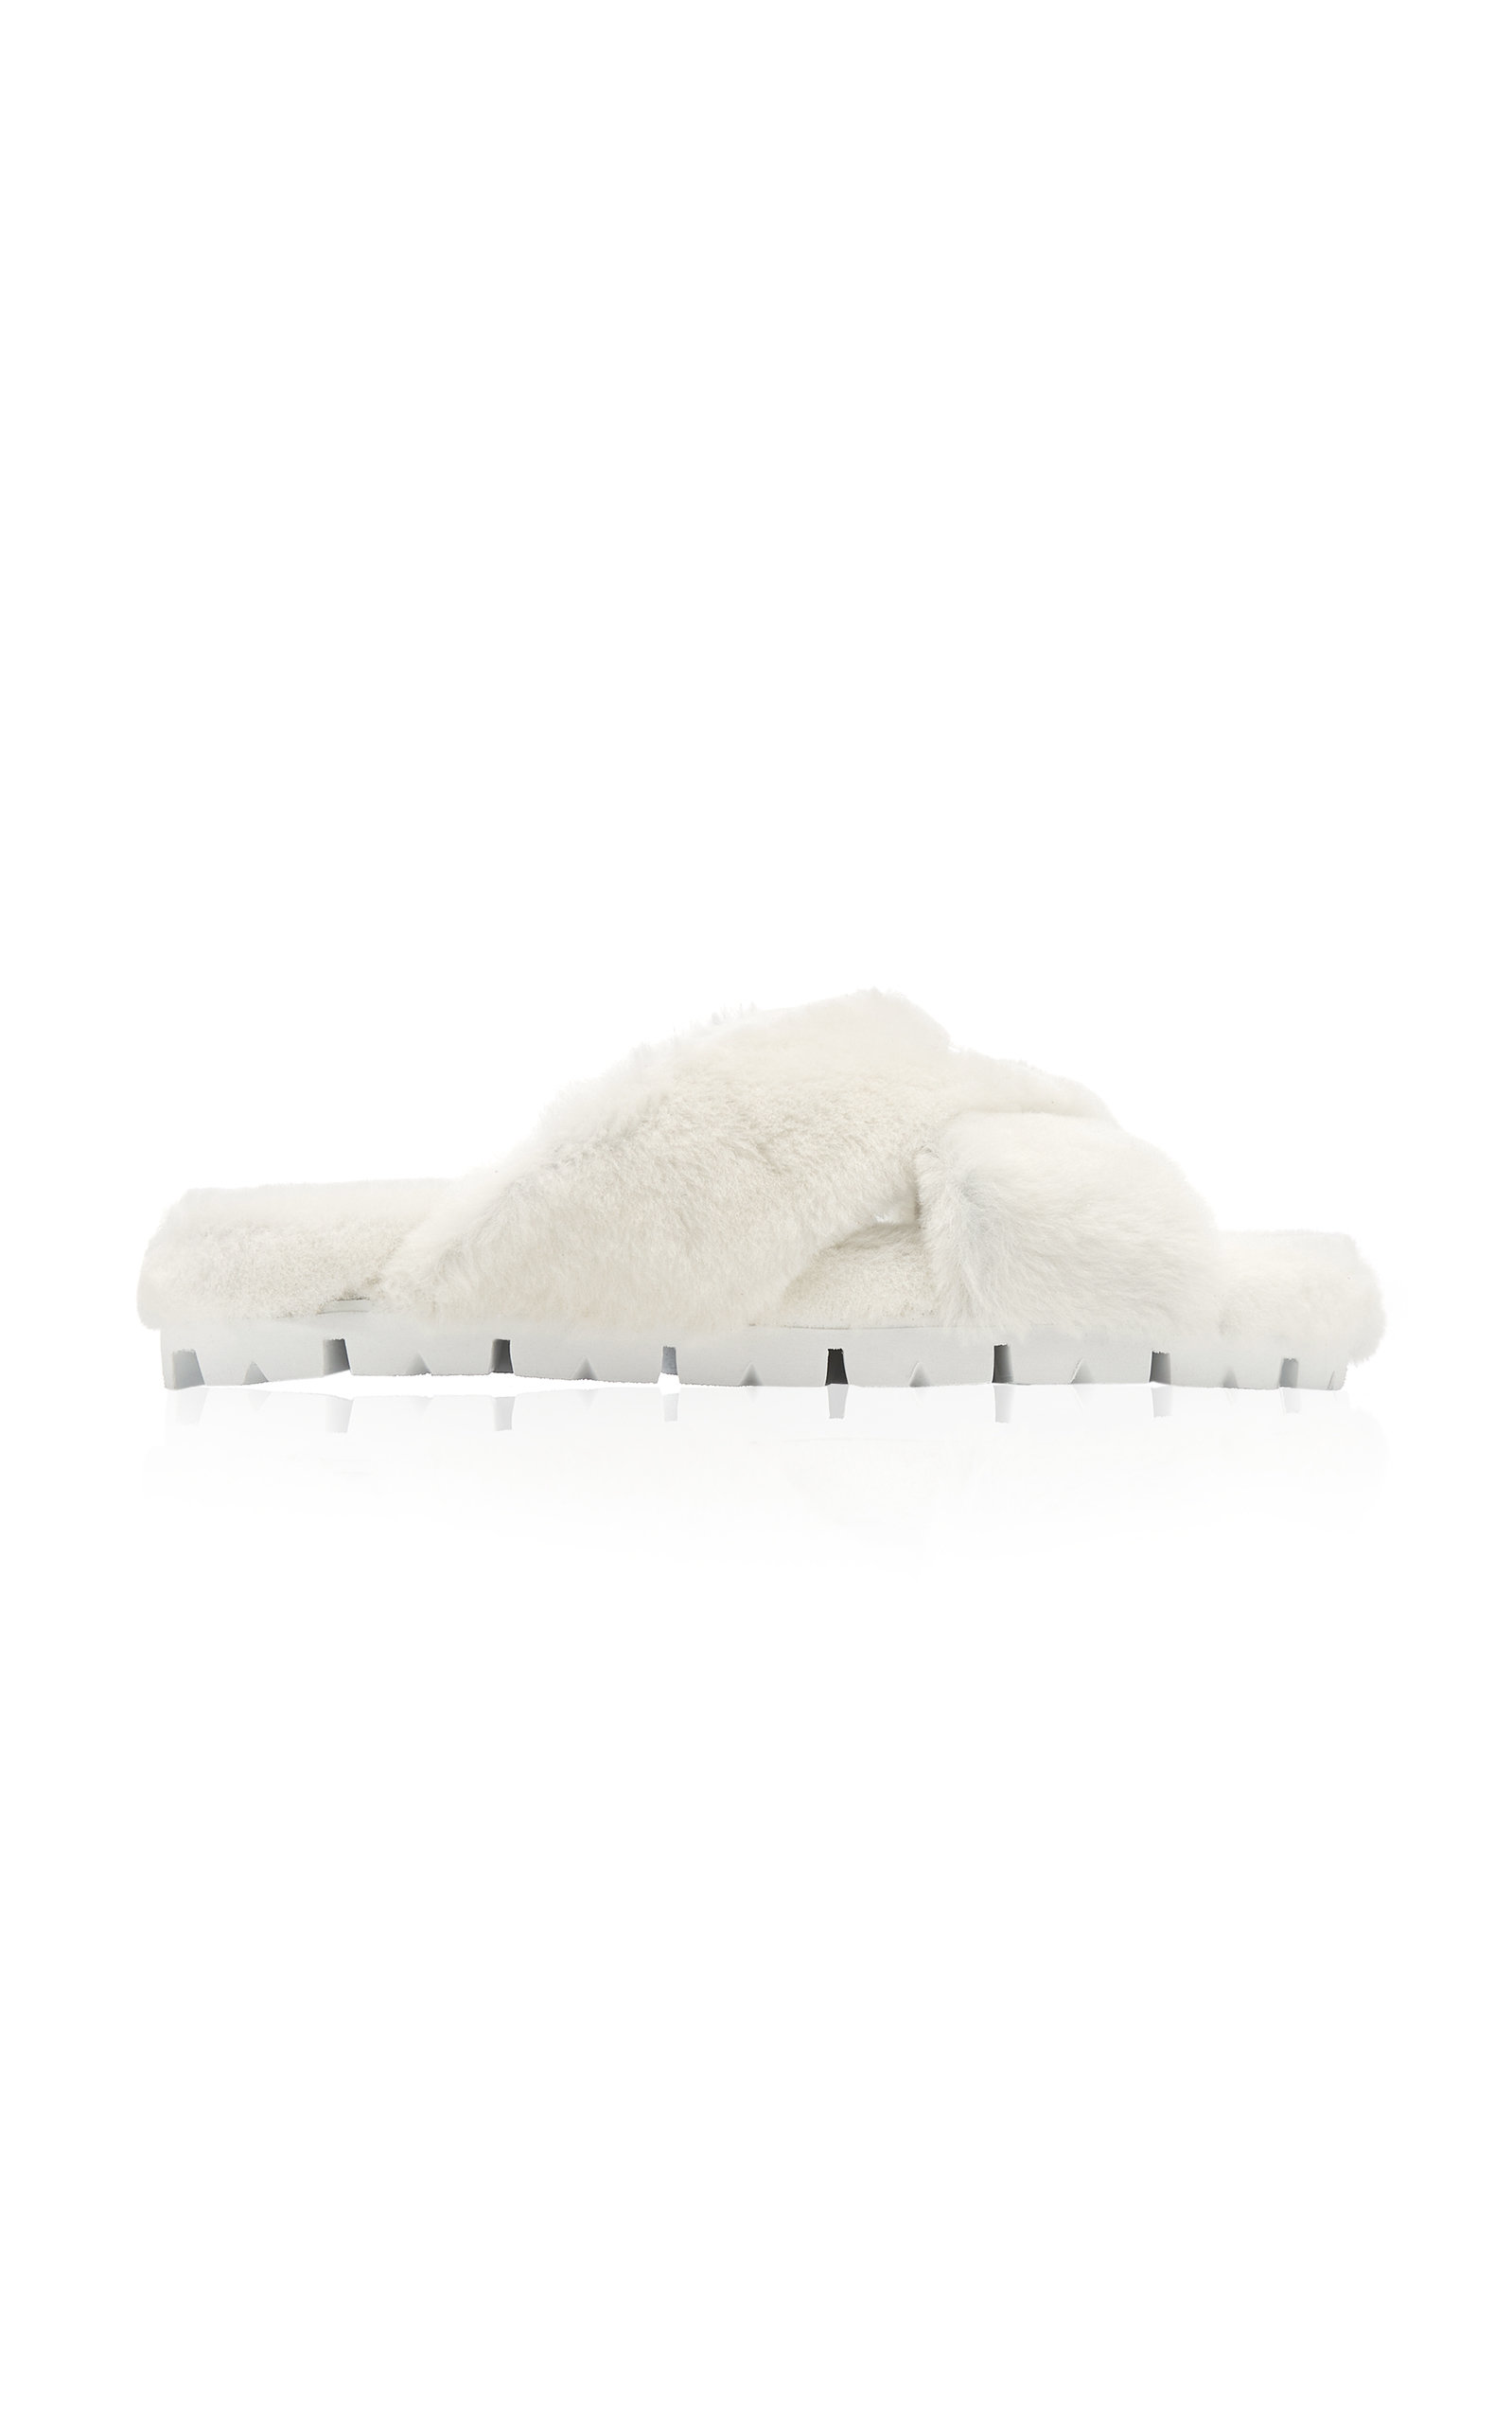 Prada - Women's Shearling Sandals - White - IT 36 - Moda Operandi